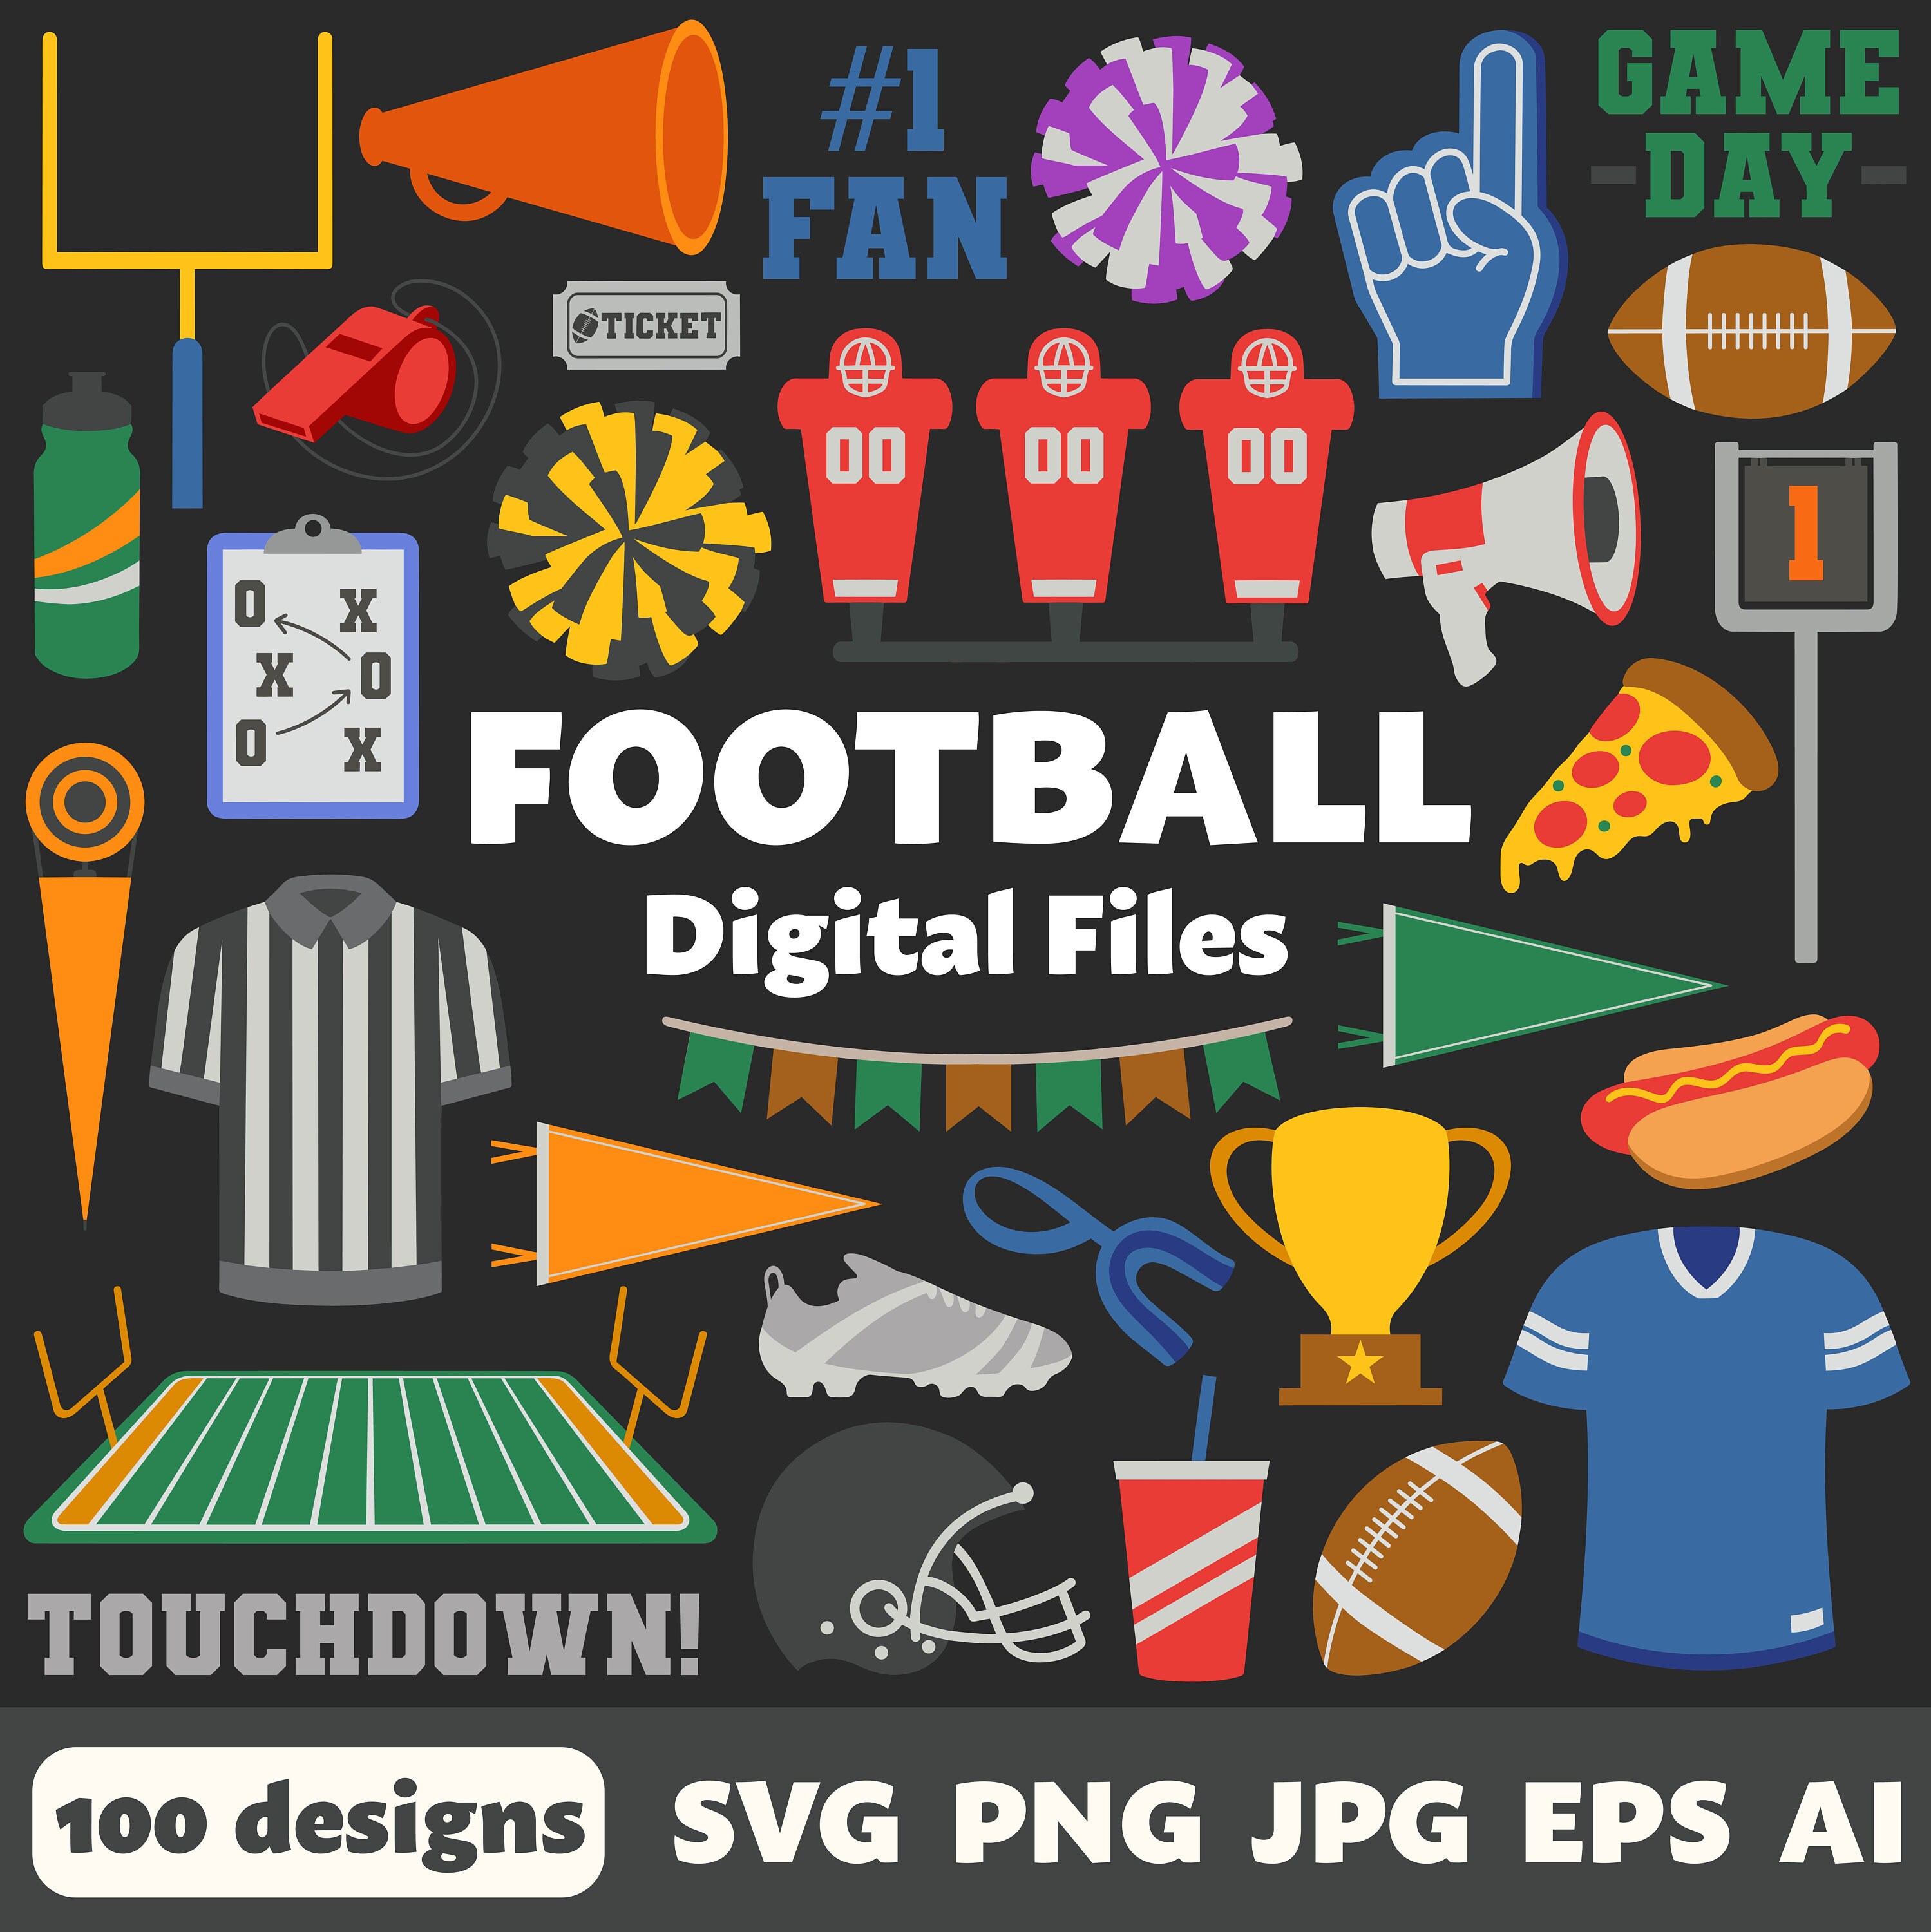 College Football Team Athletics Standers Division T shirt Design Svg Files  – Vectortshirtdesigns